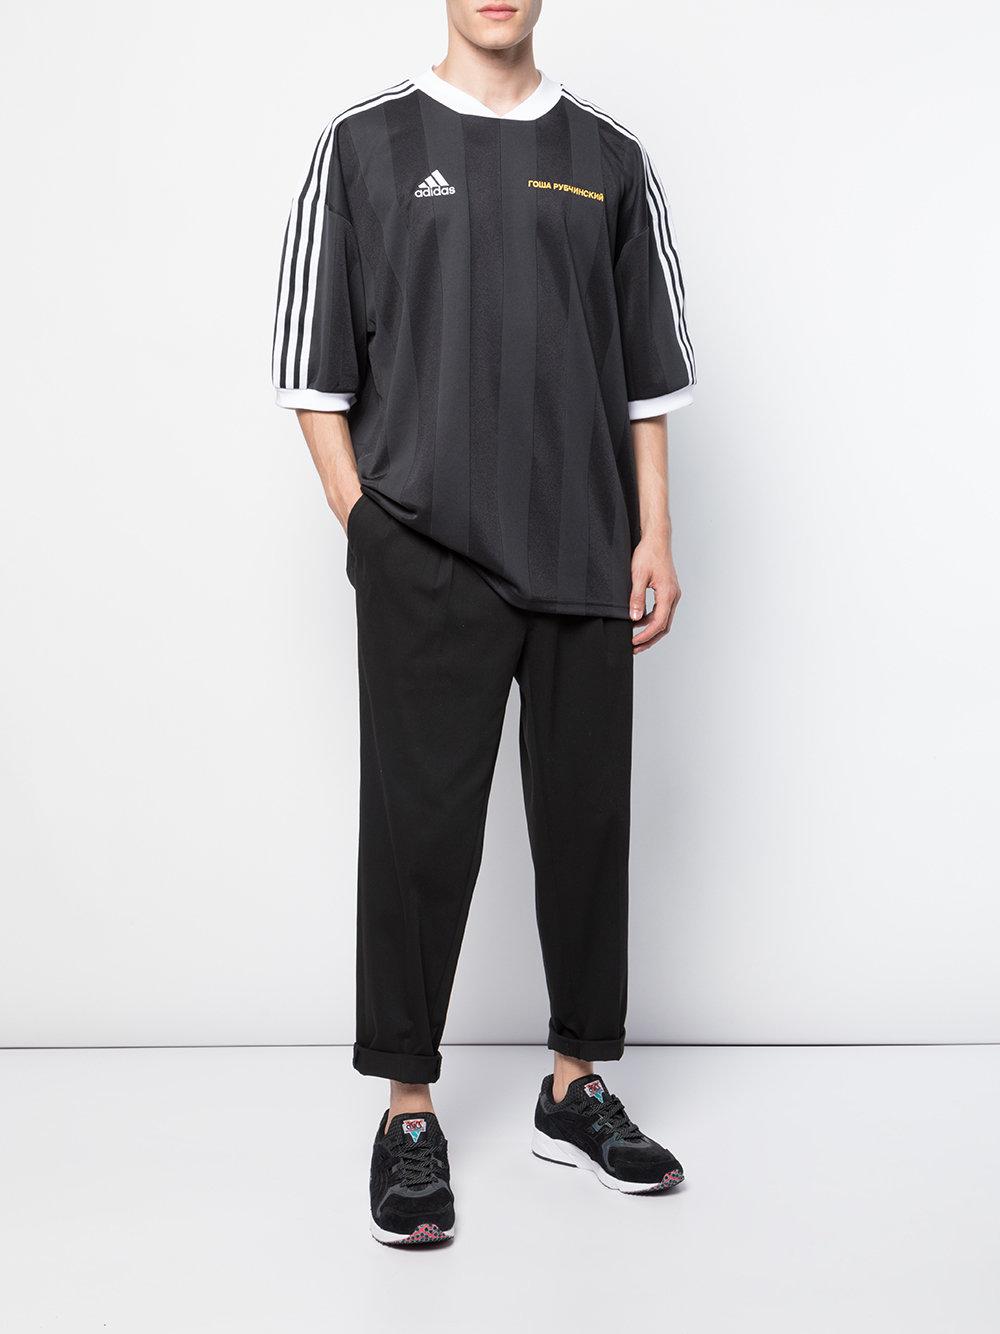 Gosha Rubchinskiy X Adidas Football T-shirt in Black for Men - Lyst